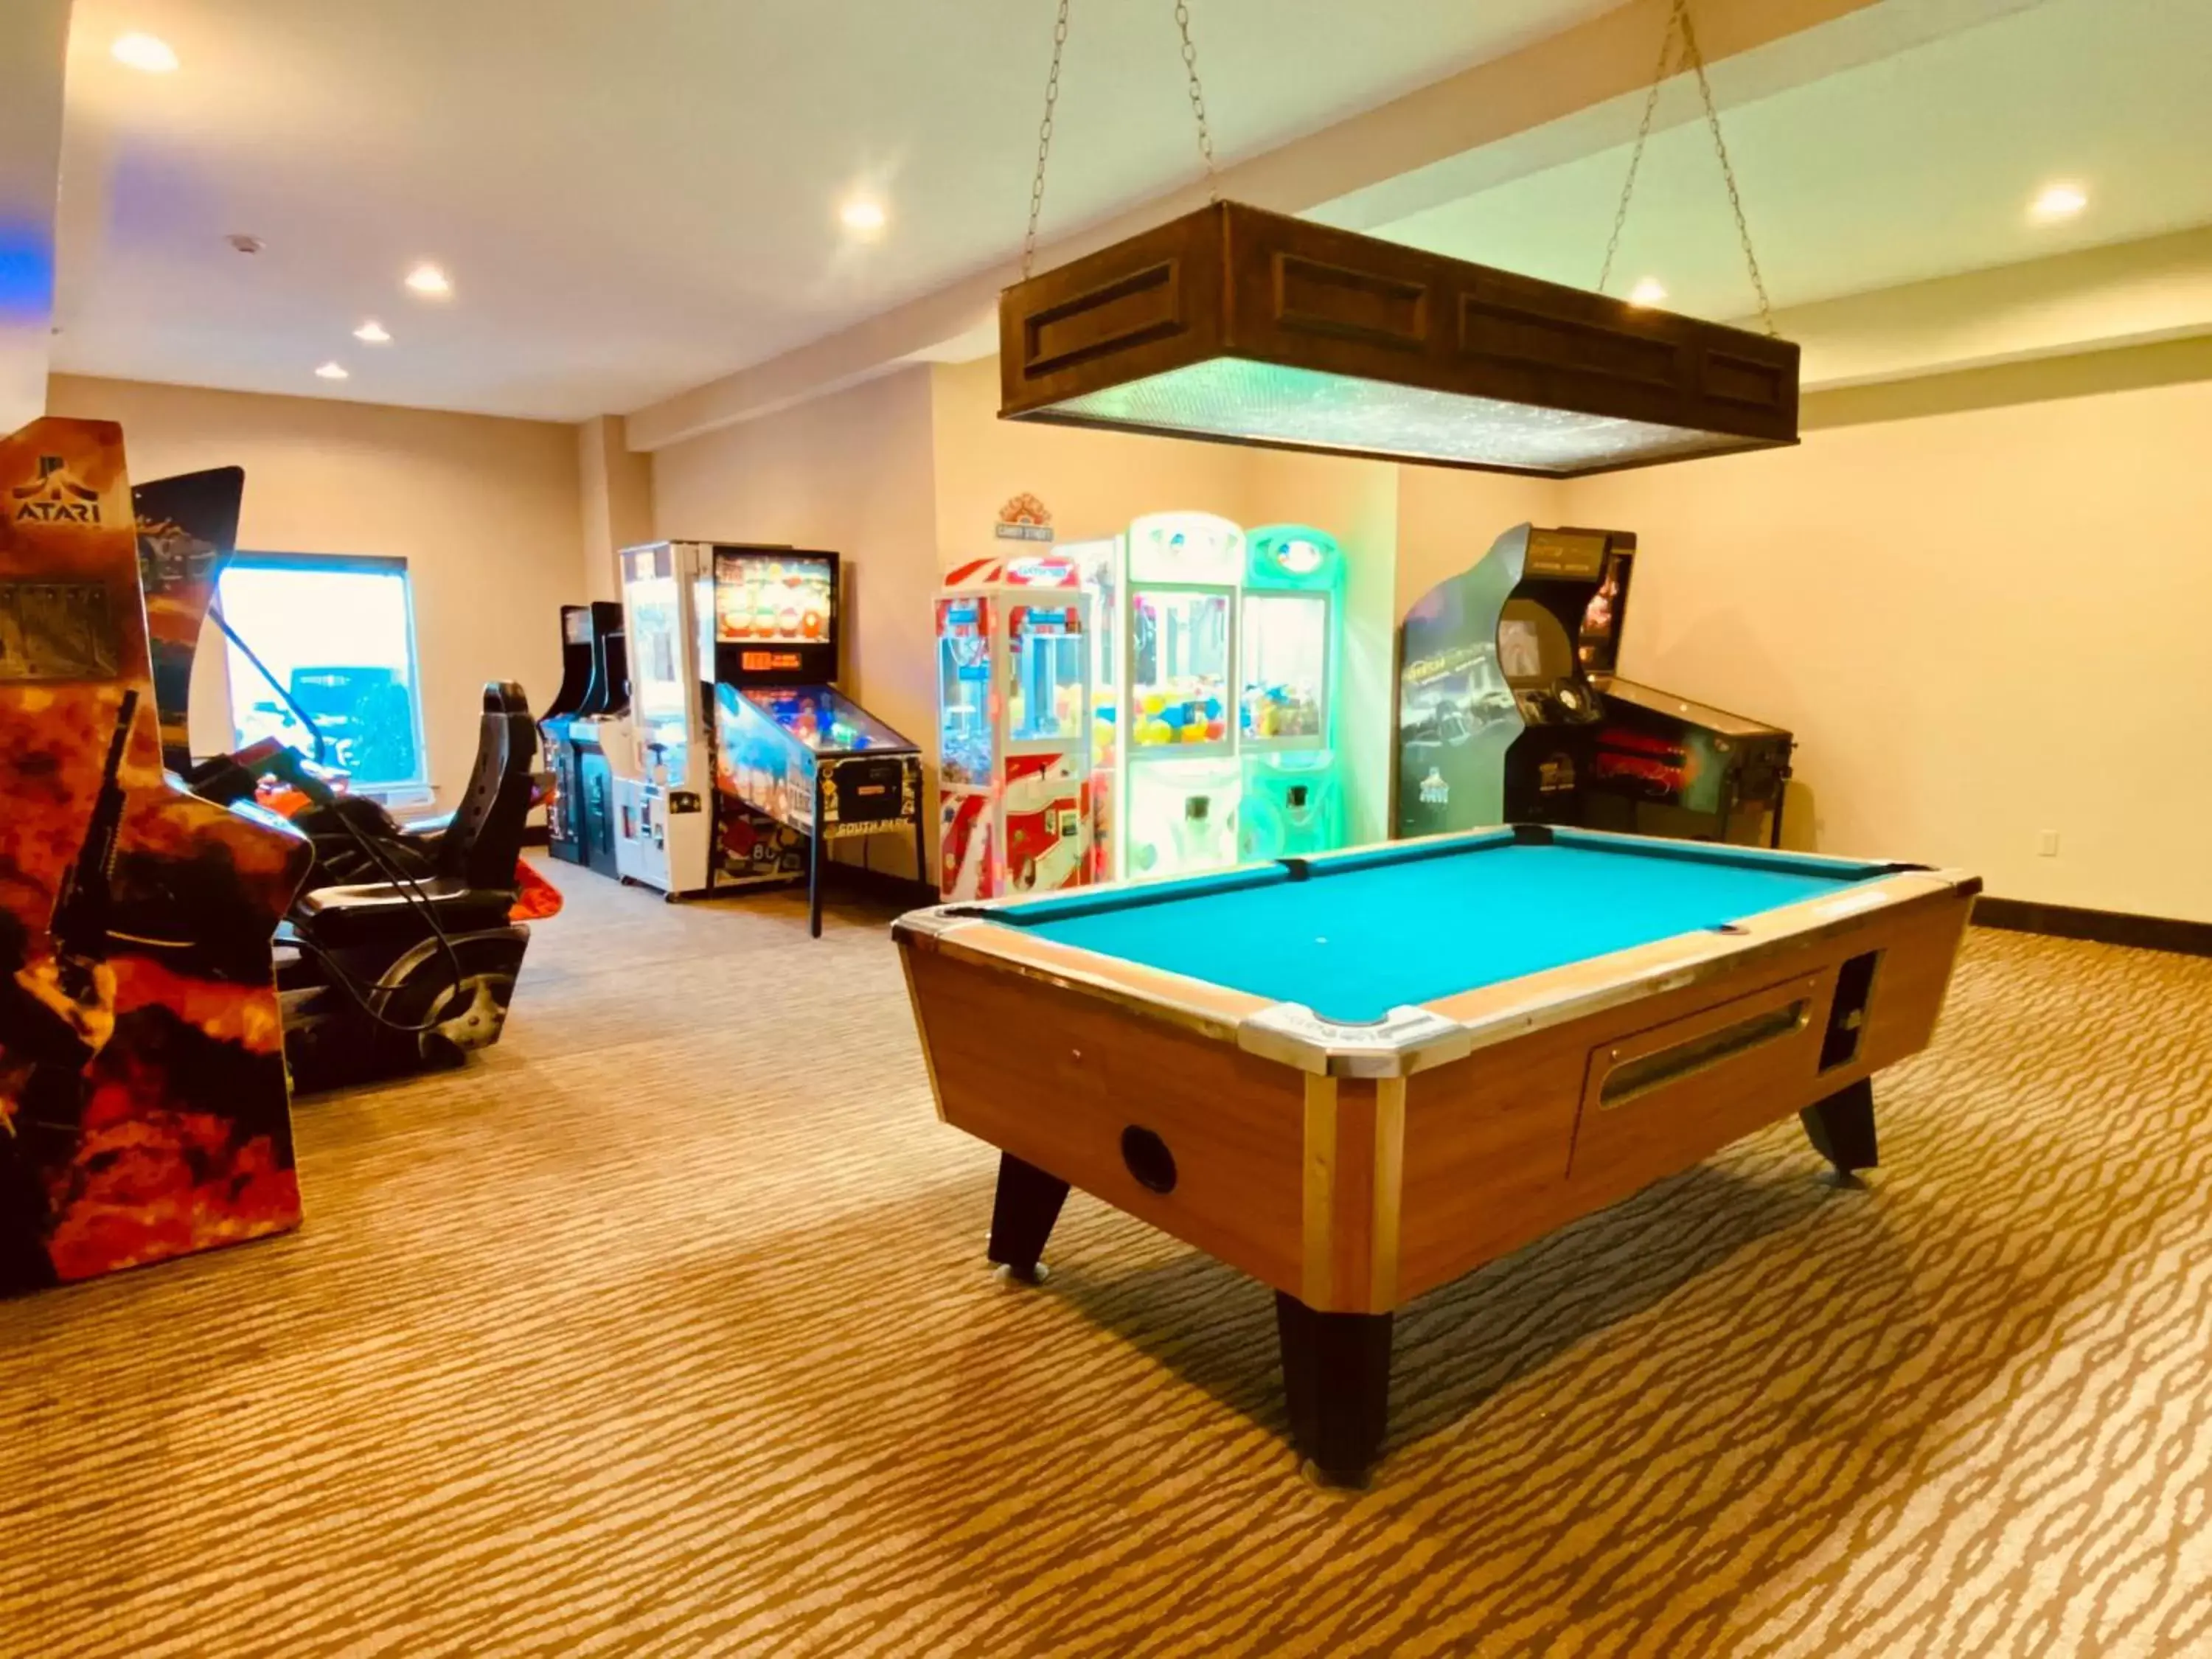 Game Room, Billiards in Comfort Suites Scranton near Montage Mountain